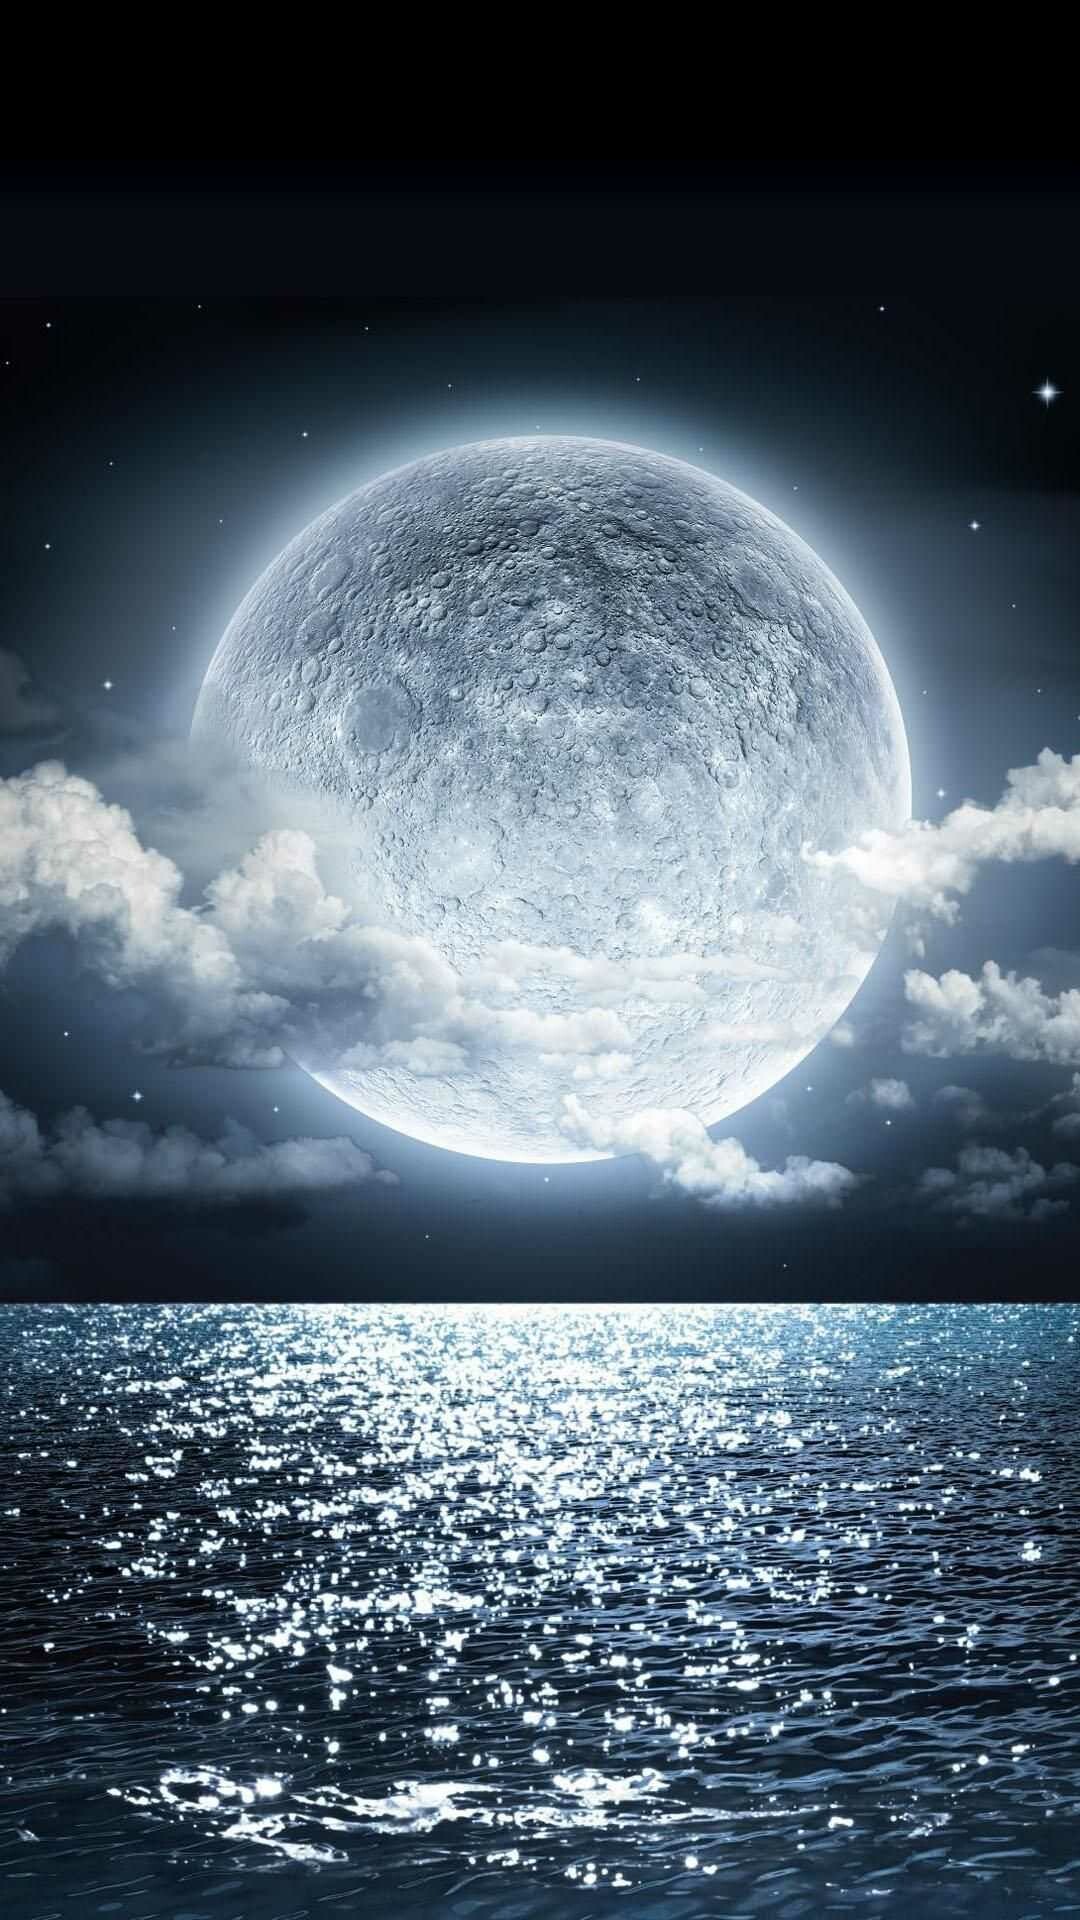 Moonlight: The broad expanse of water reflecting the moon, Nightfall. 1080x1920 Full HD Wallpaper.